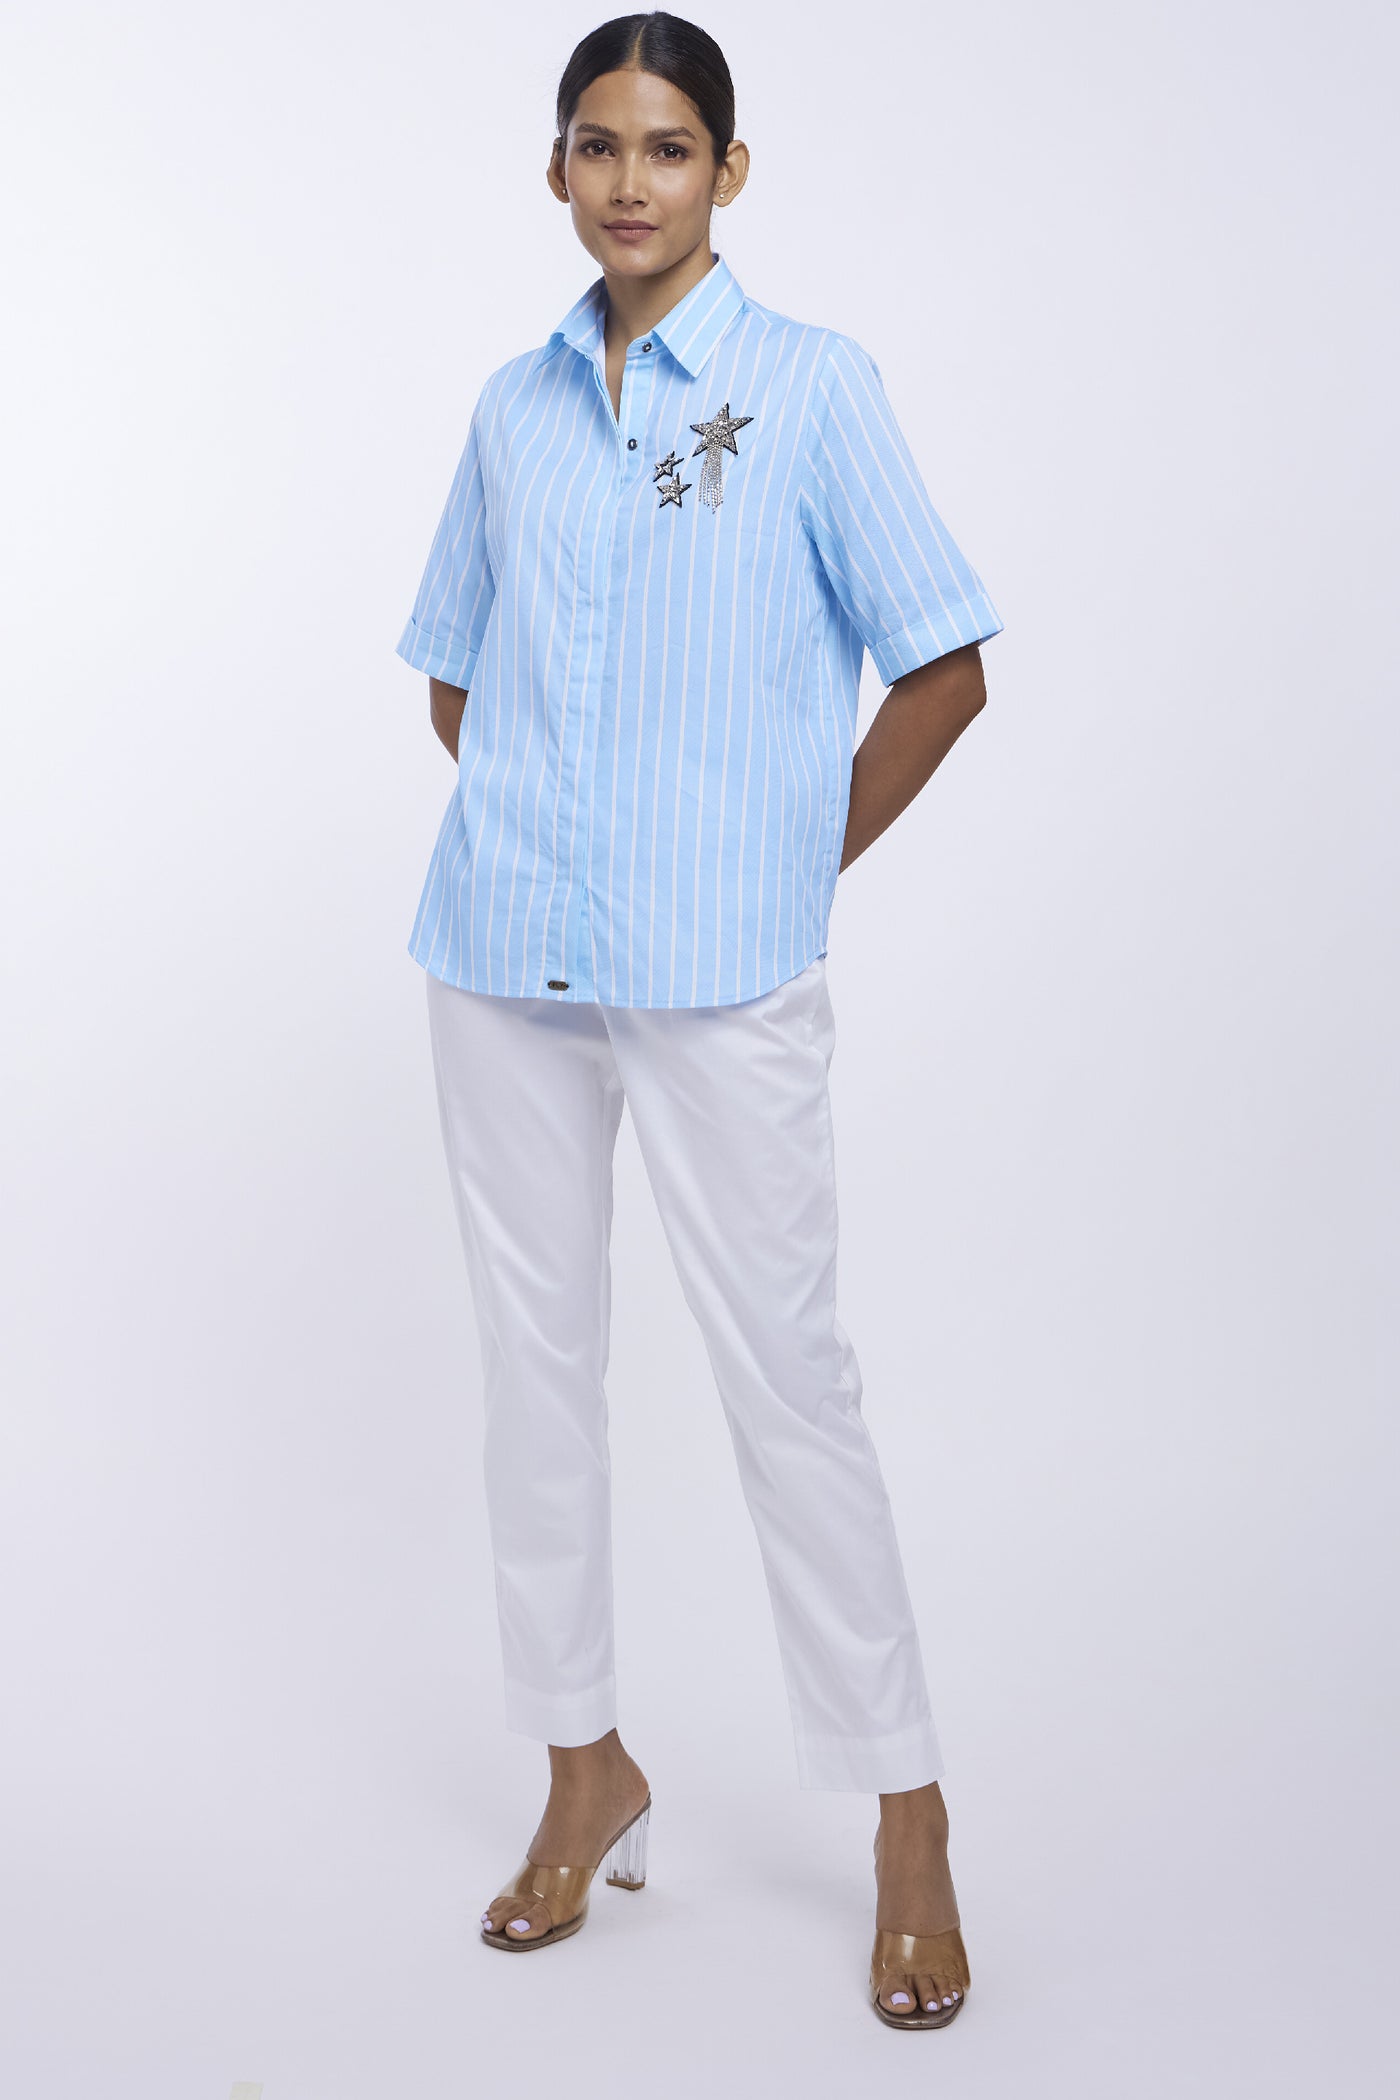 Pallavi Swadi Blue Stripe Star Fringe Shirt indian designer online shopping melange singapore